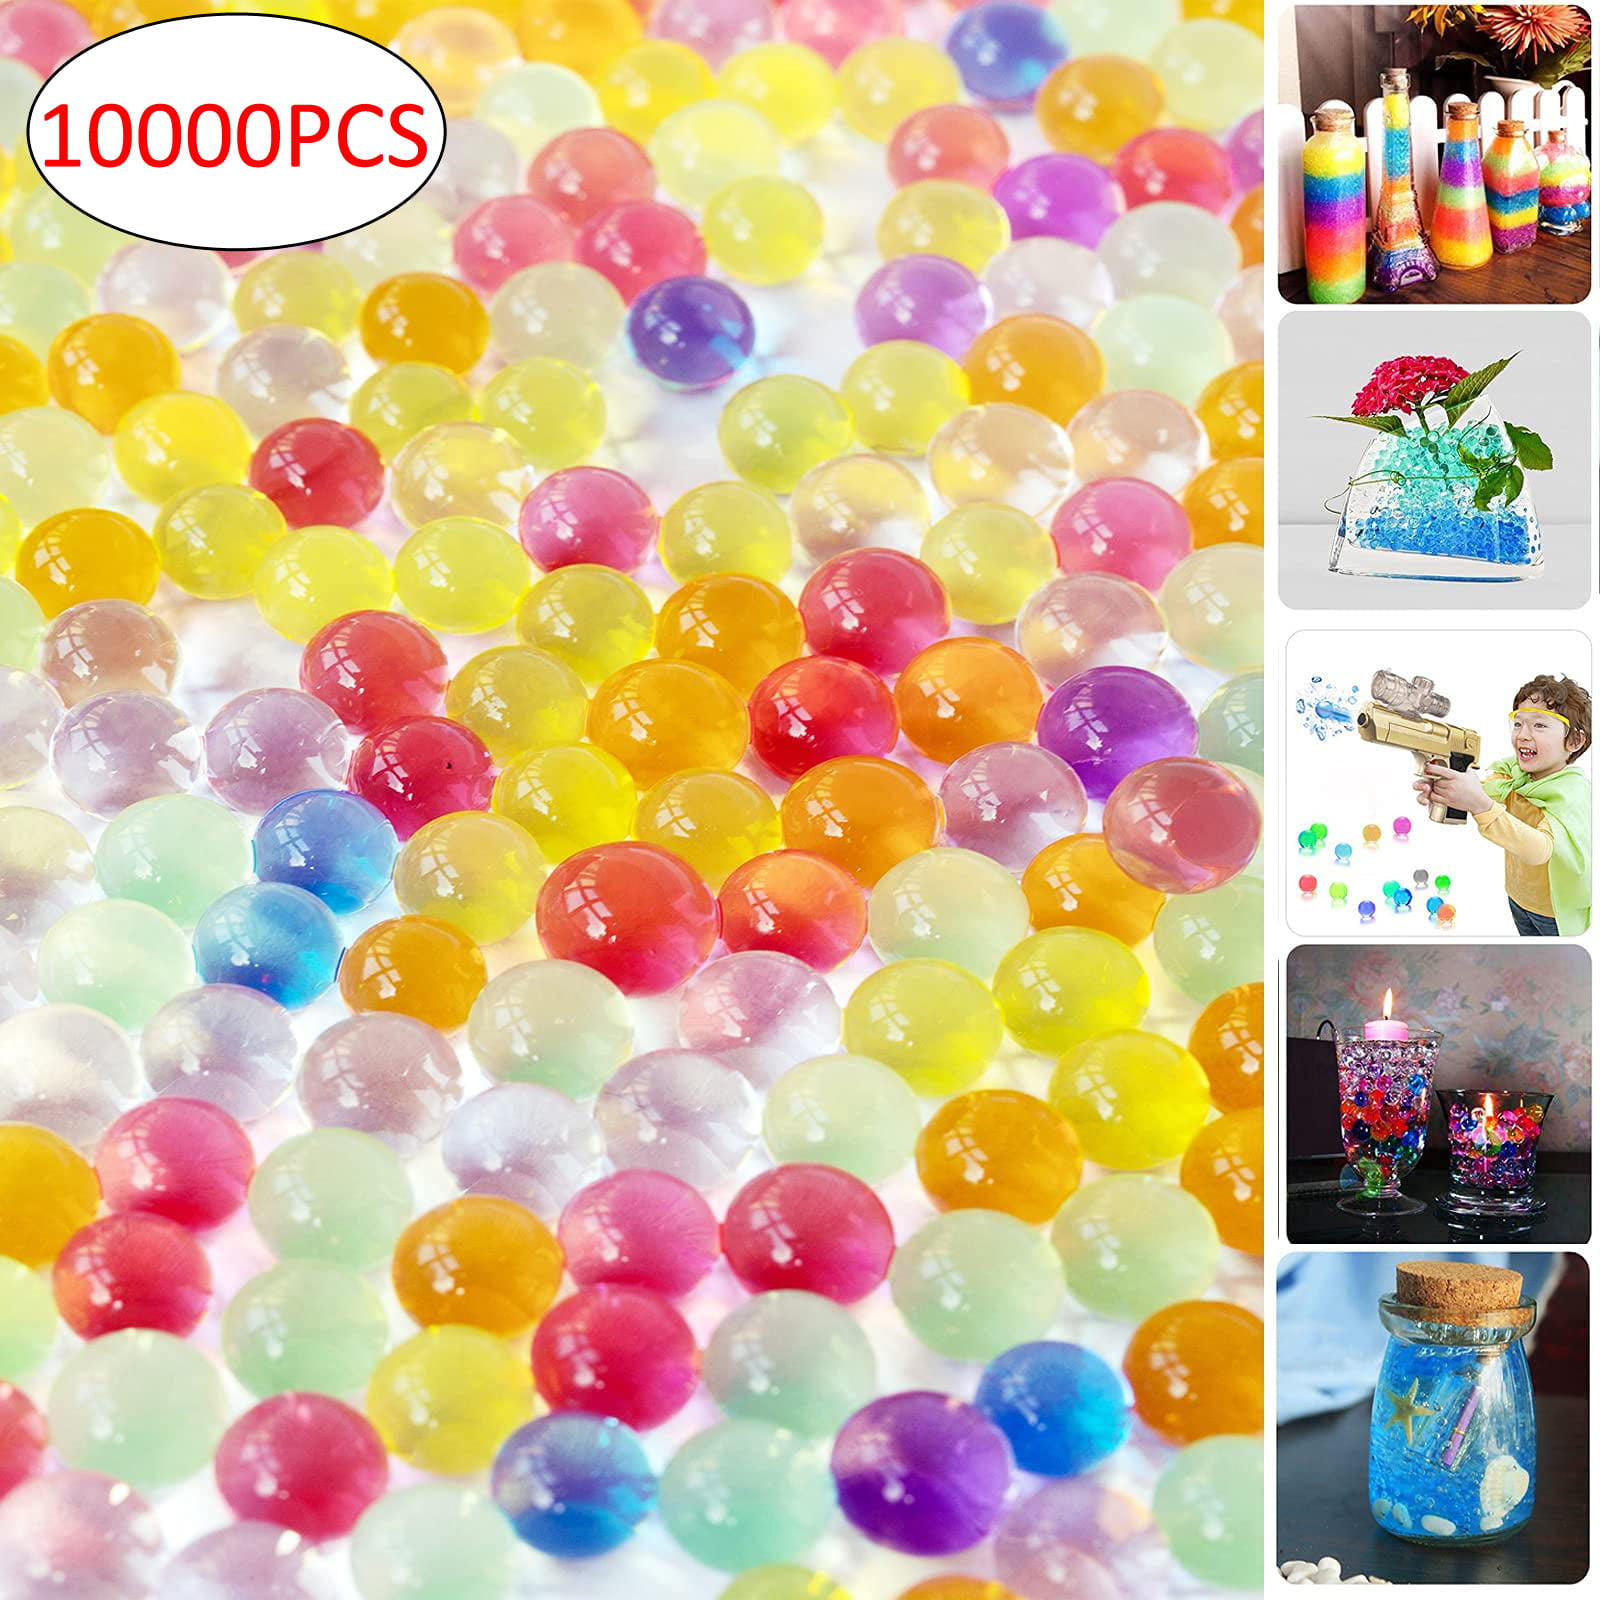 1000PCS water beads Pearl shaped Crystal Soil Mud Grow Magic Jelly balls Decor 